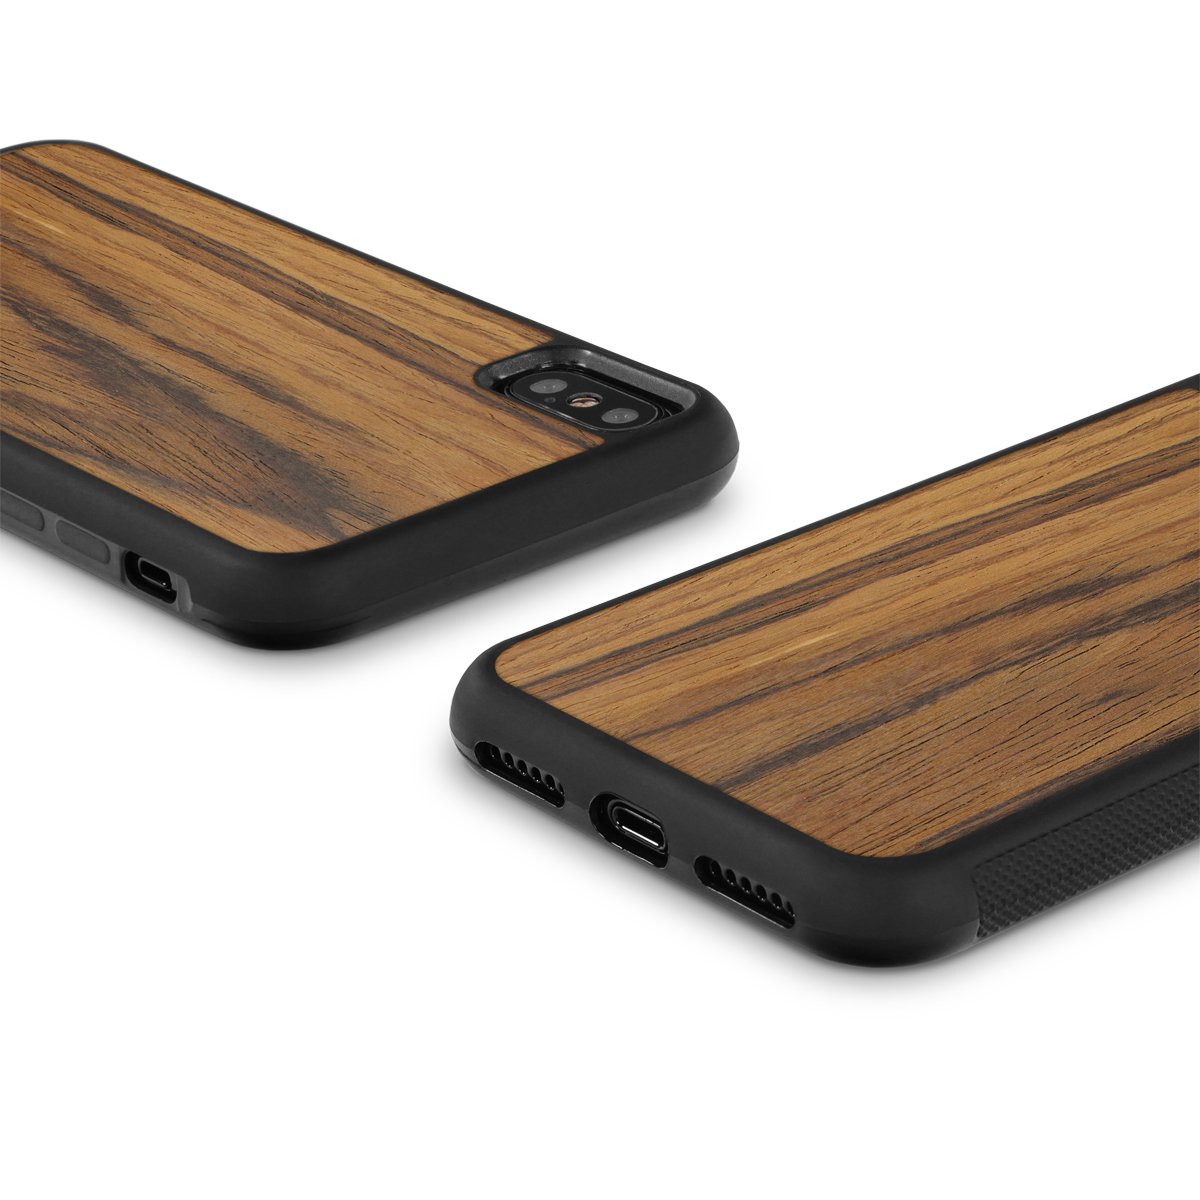 iPhone XS Max — #WoodBack Explorer Case